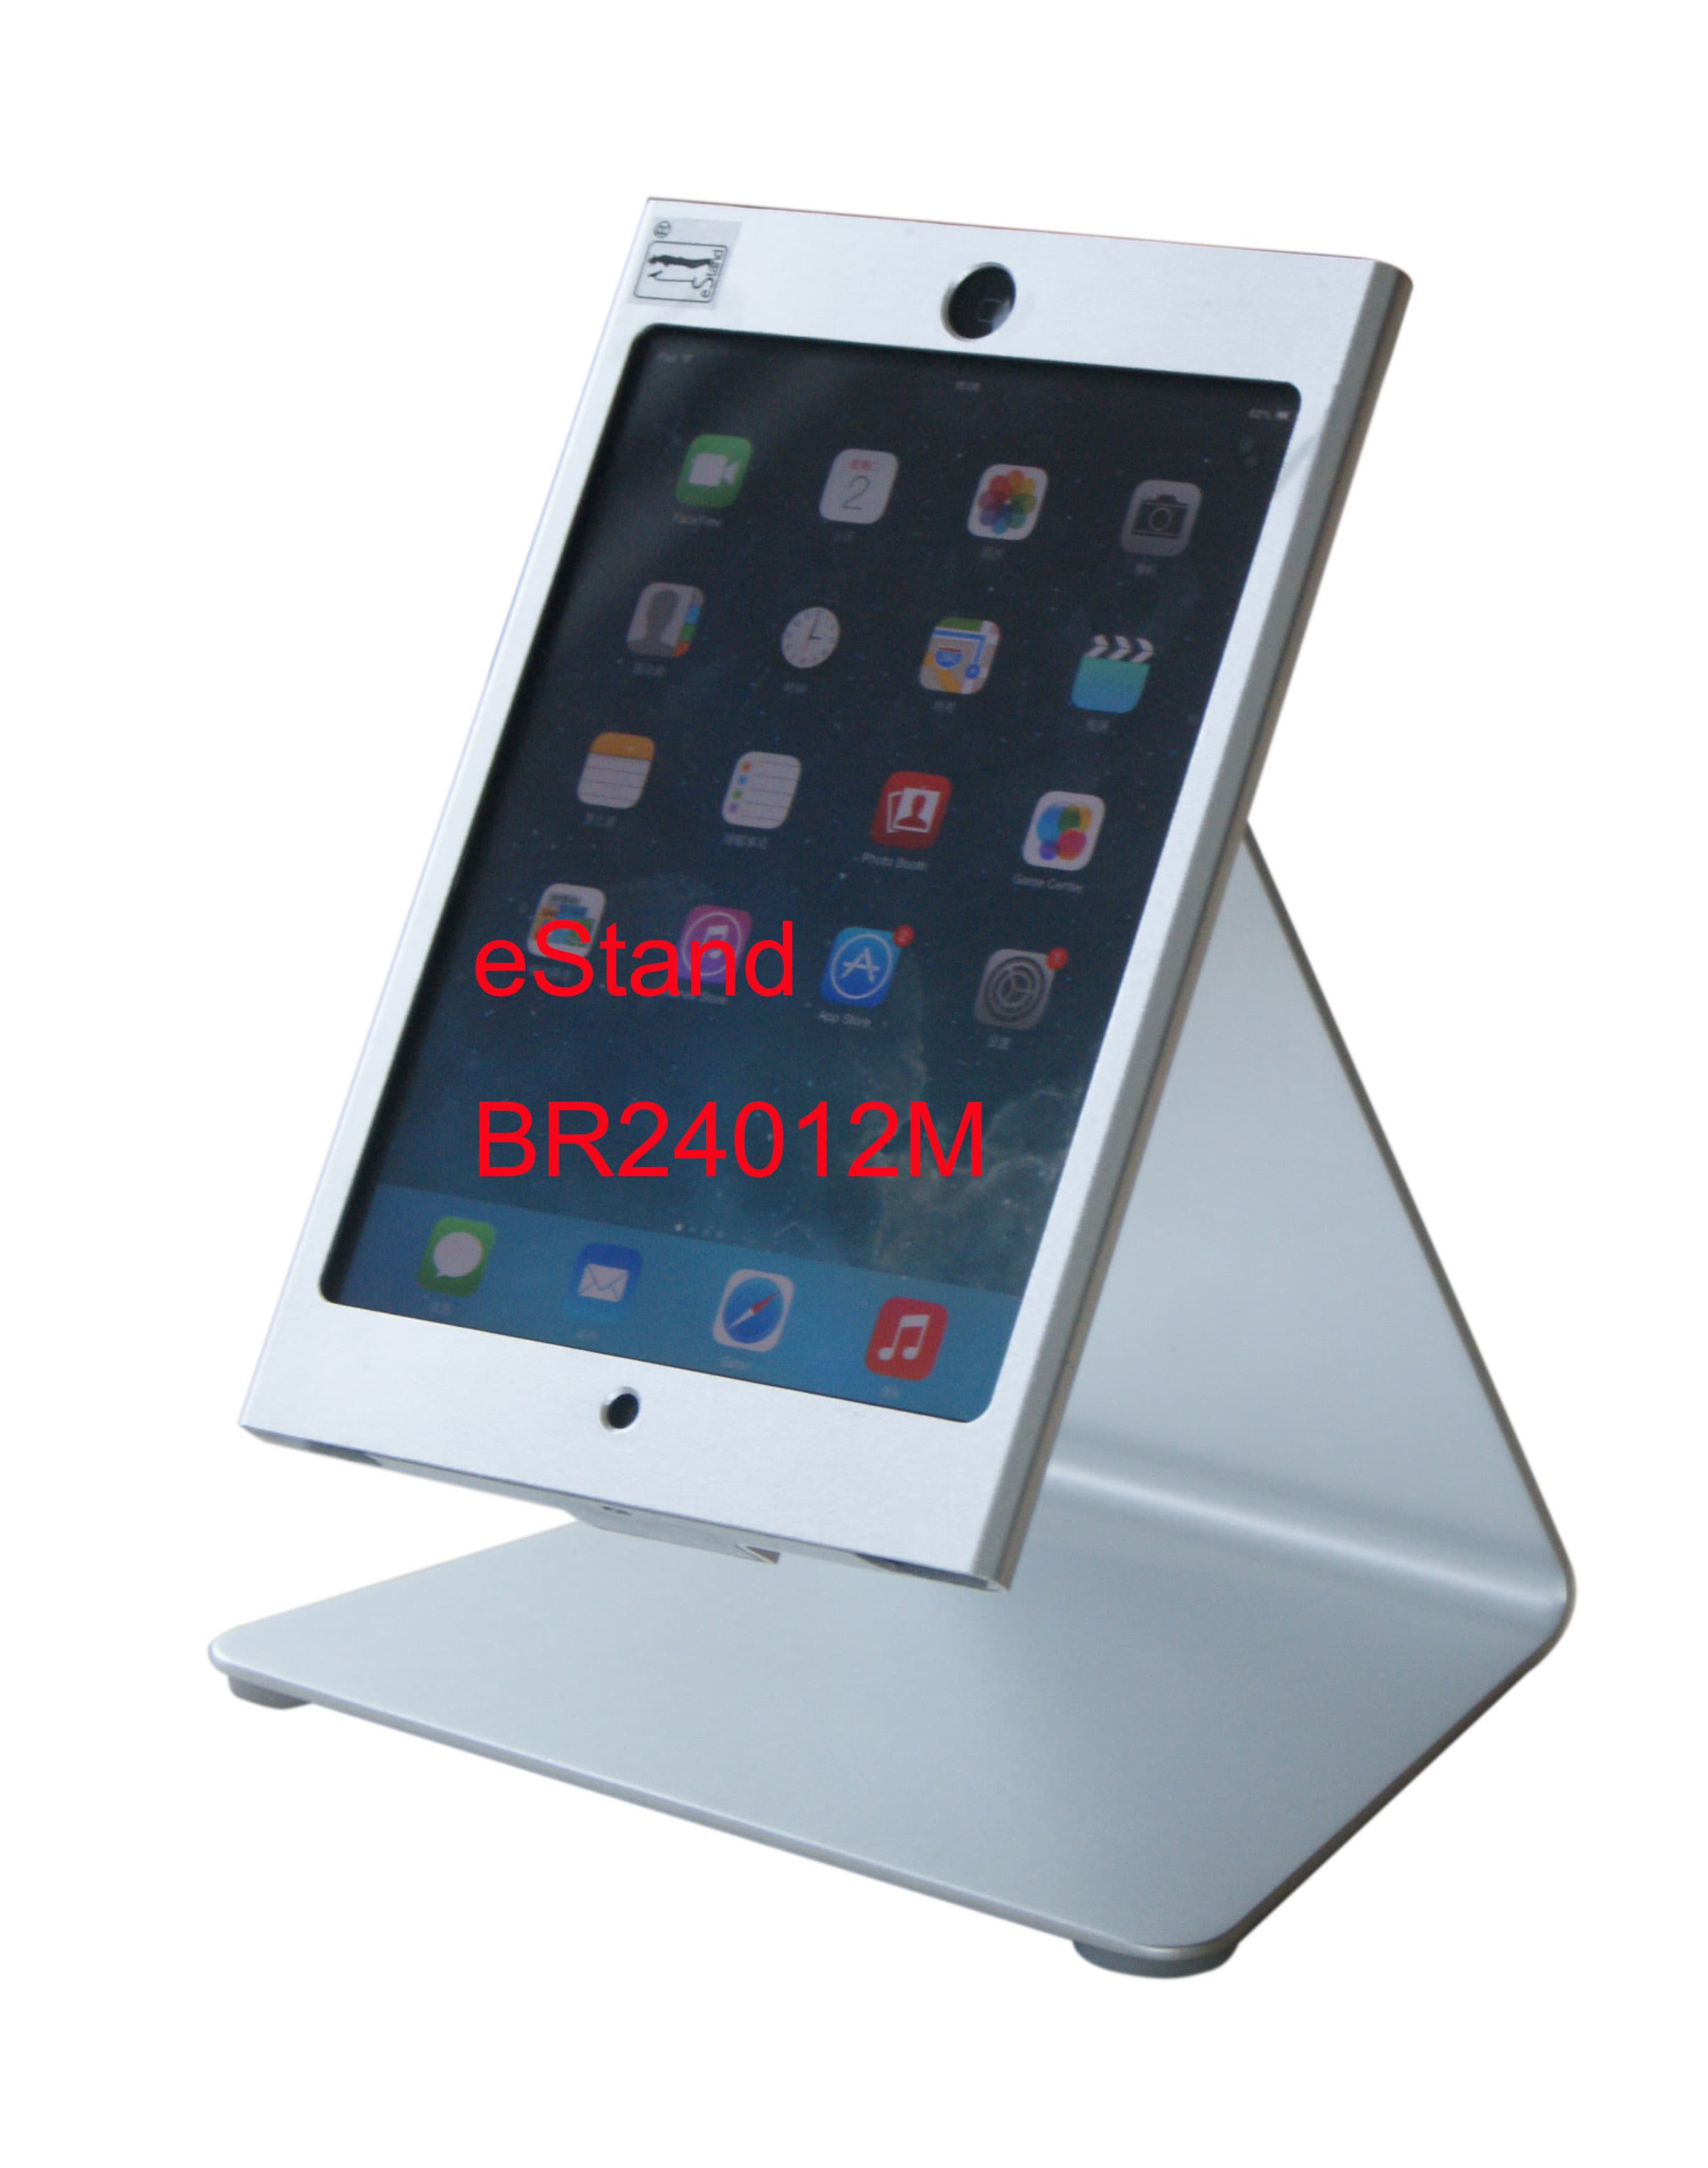 eStand BR24012M tablet holder for ipad mini display